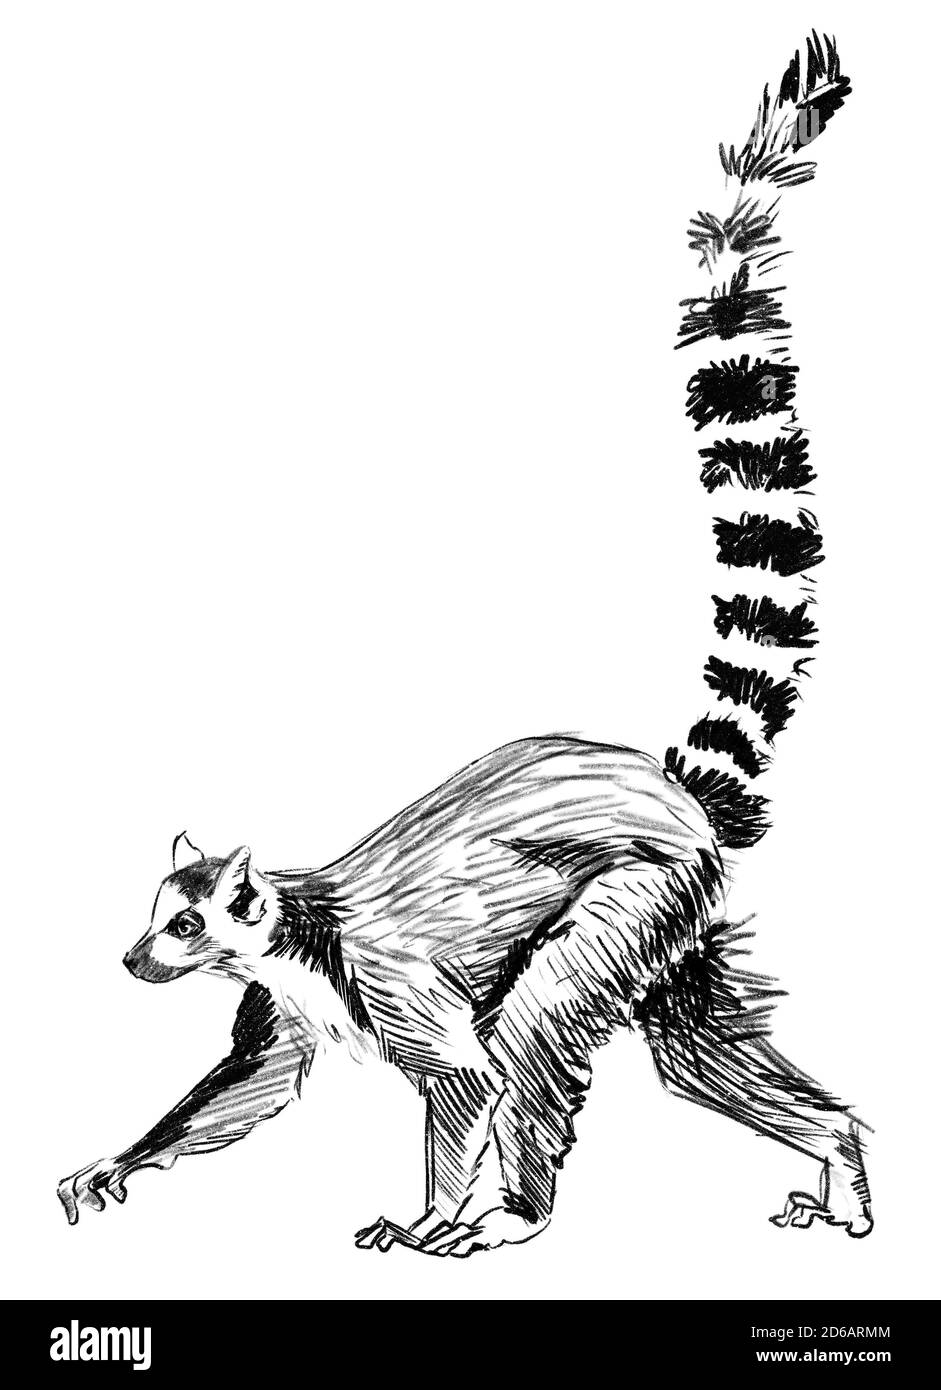 Sketch Lemur, madagascar. Hand drawn pencil illustration Stock Photo